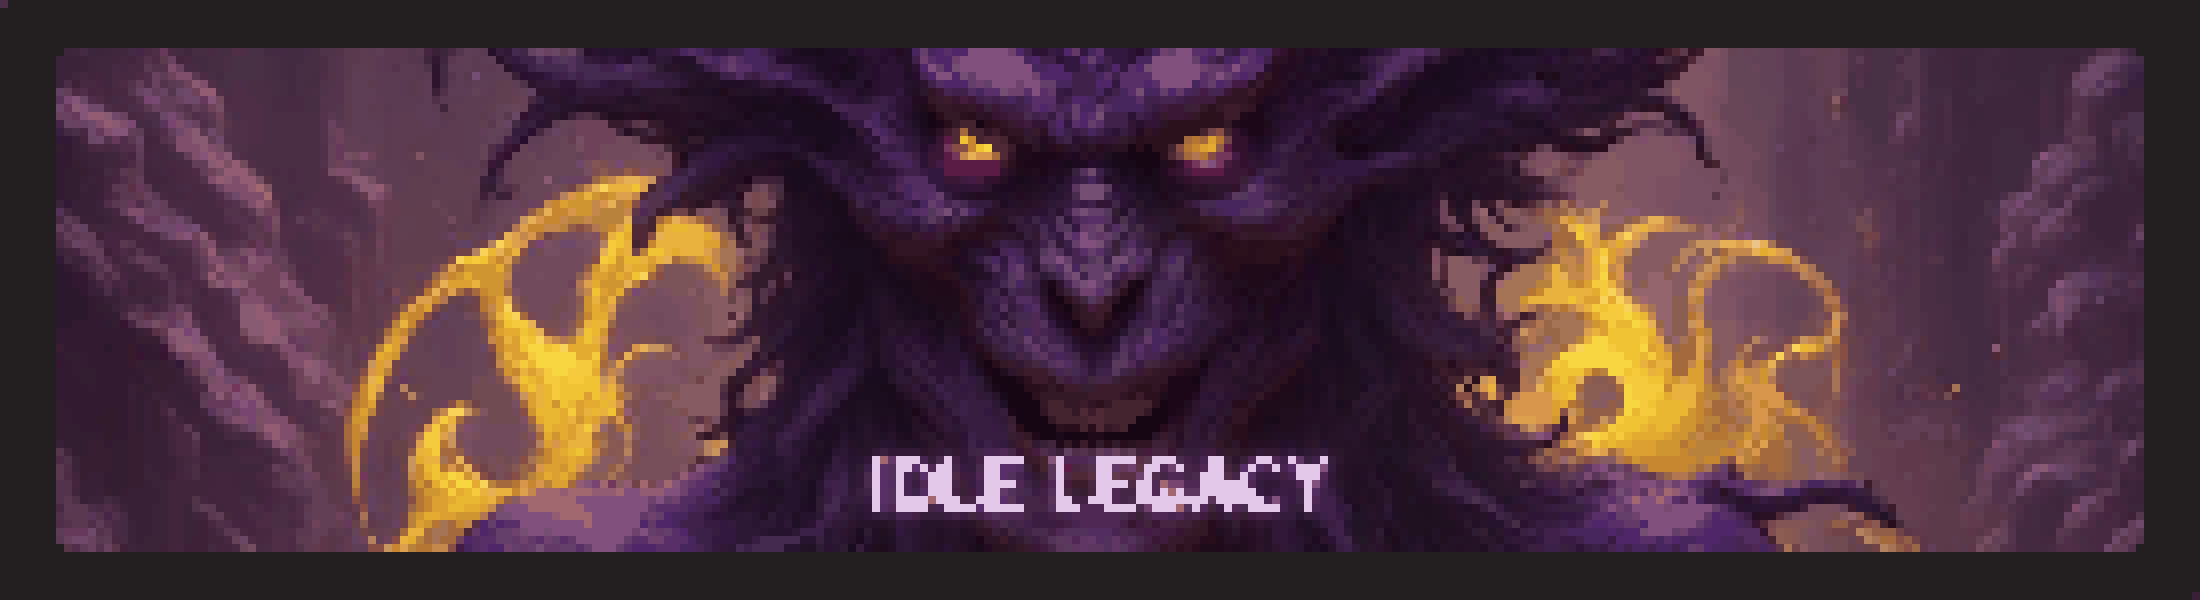 Idle Legacy